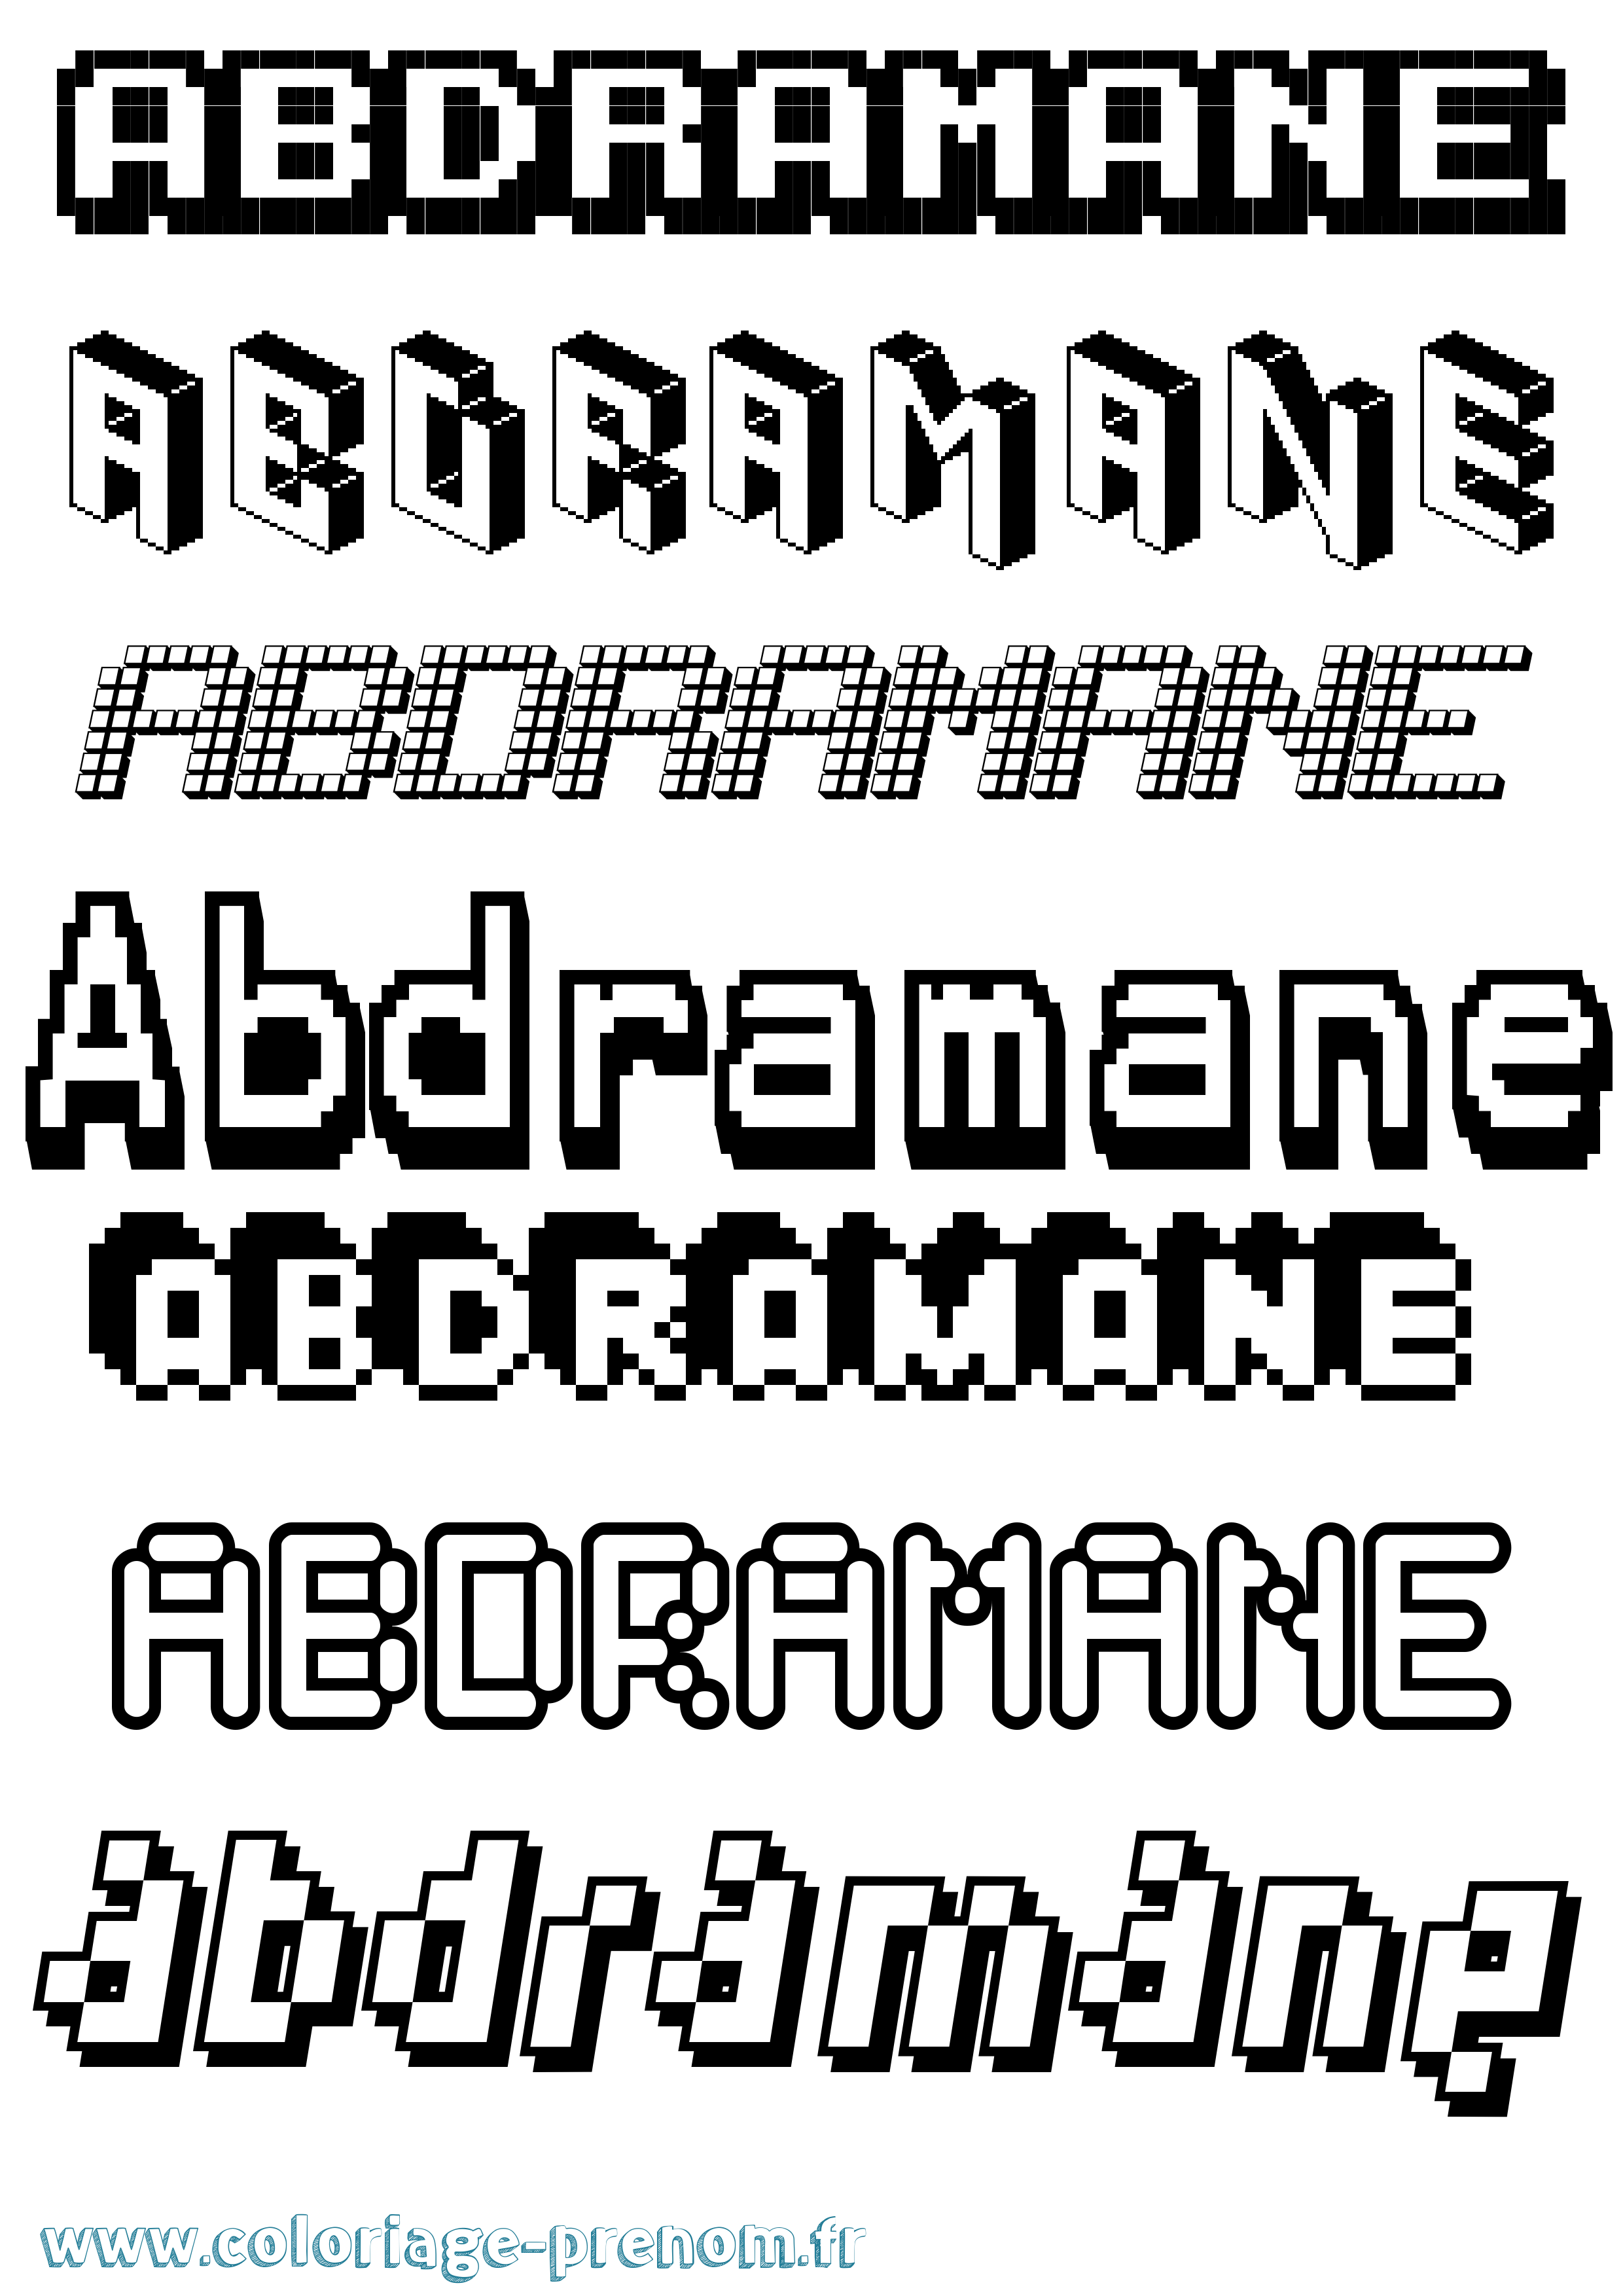 Coloriage prénom Abdramane Pixel